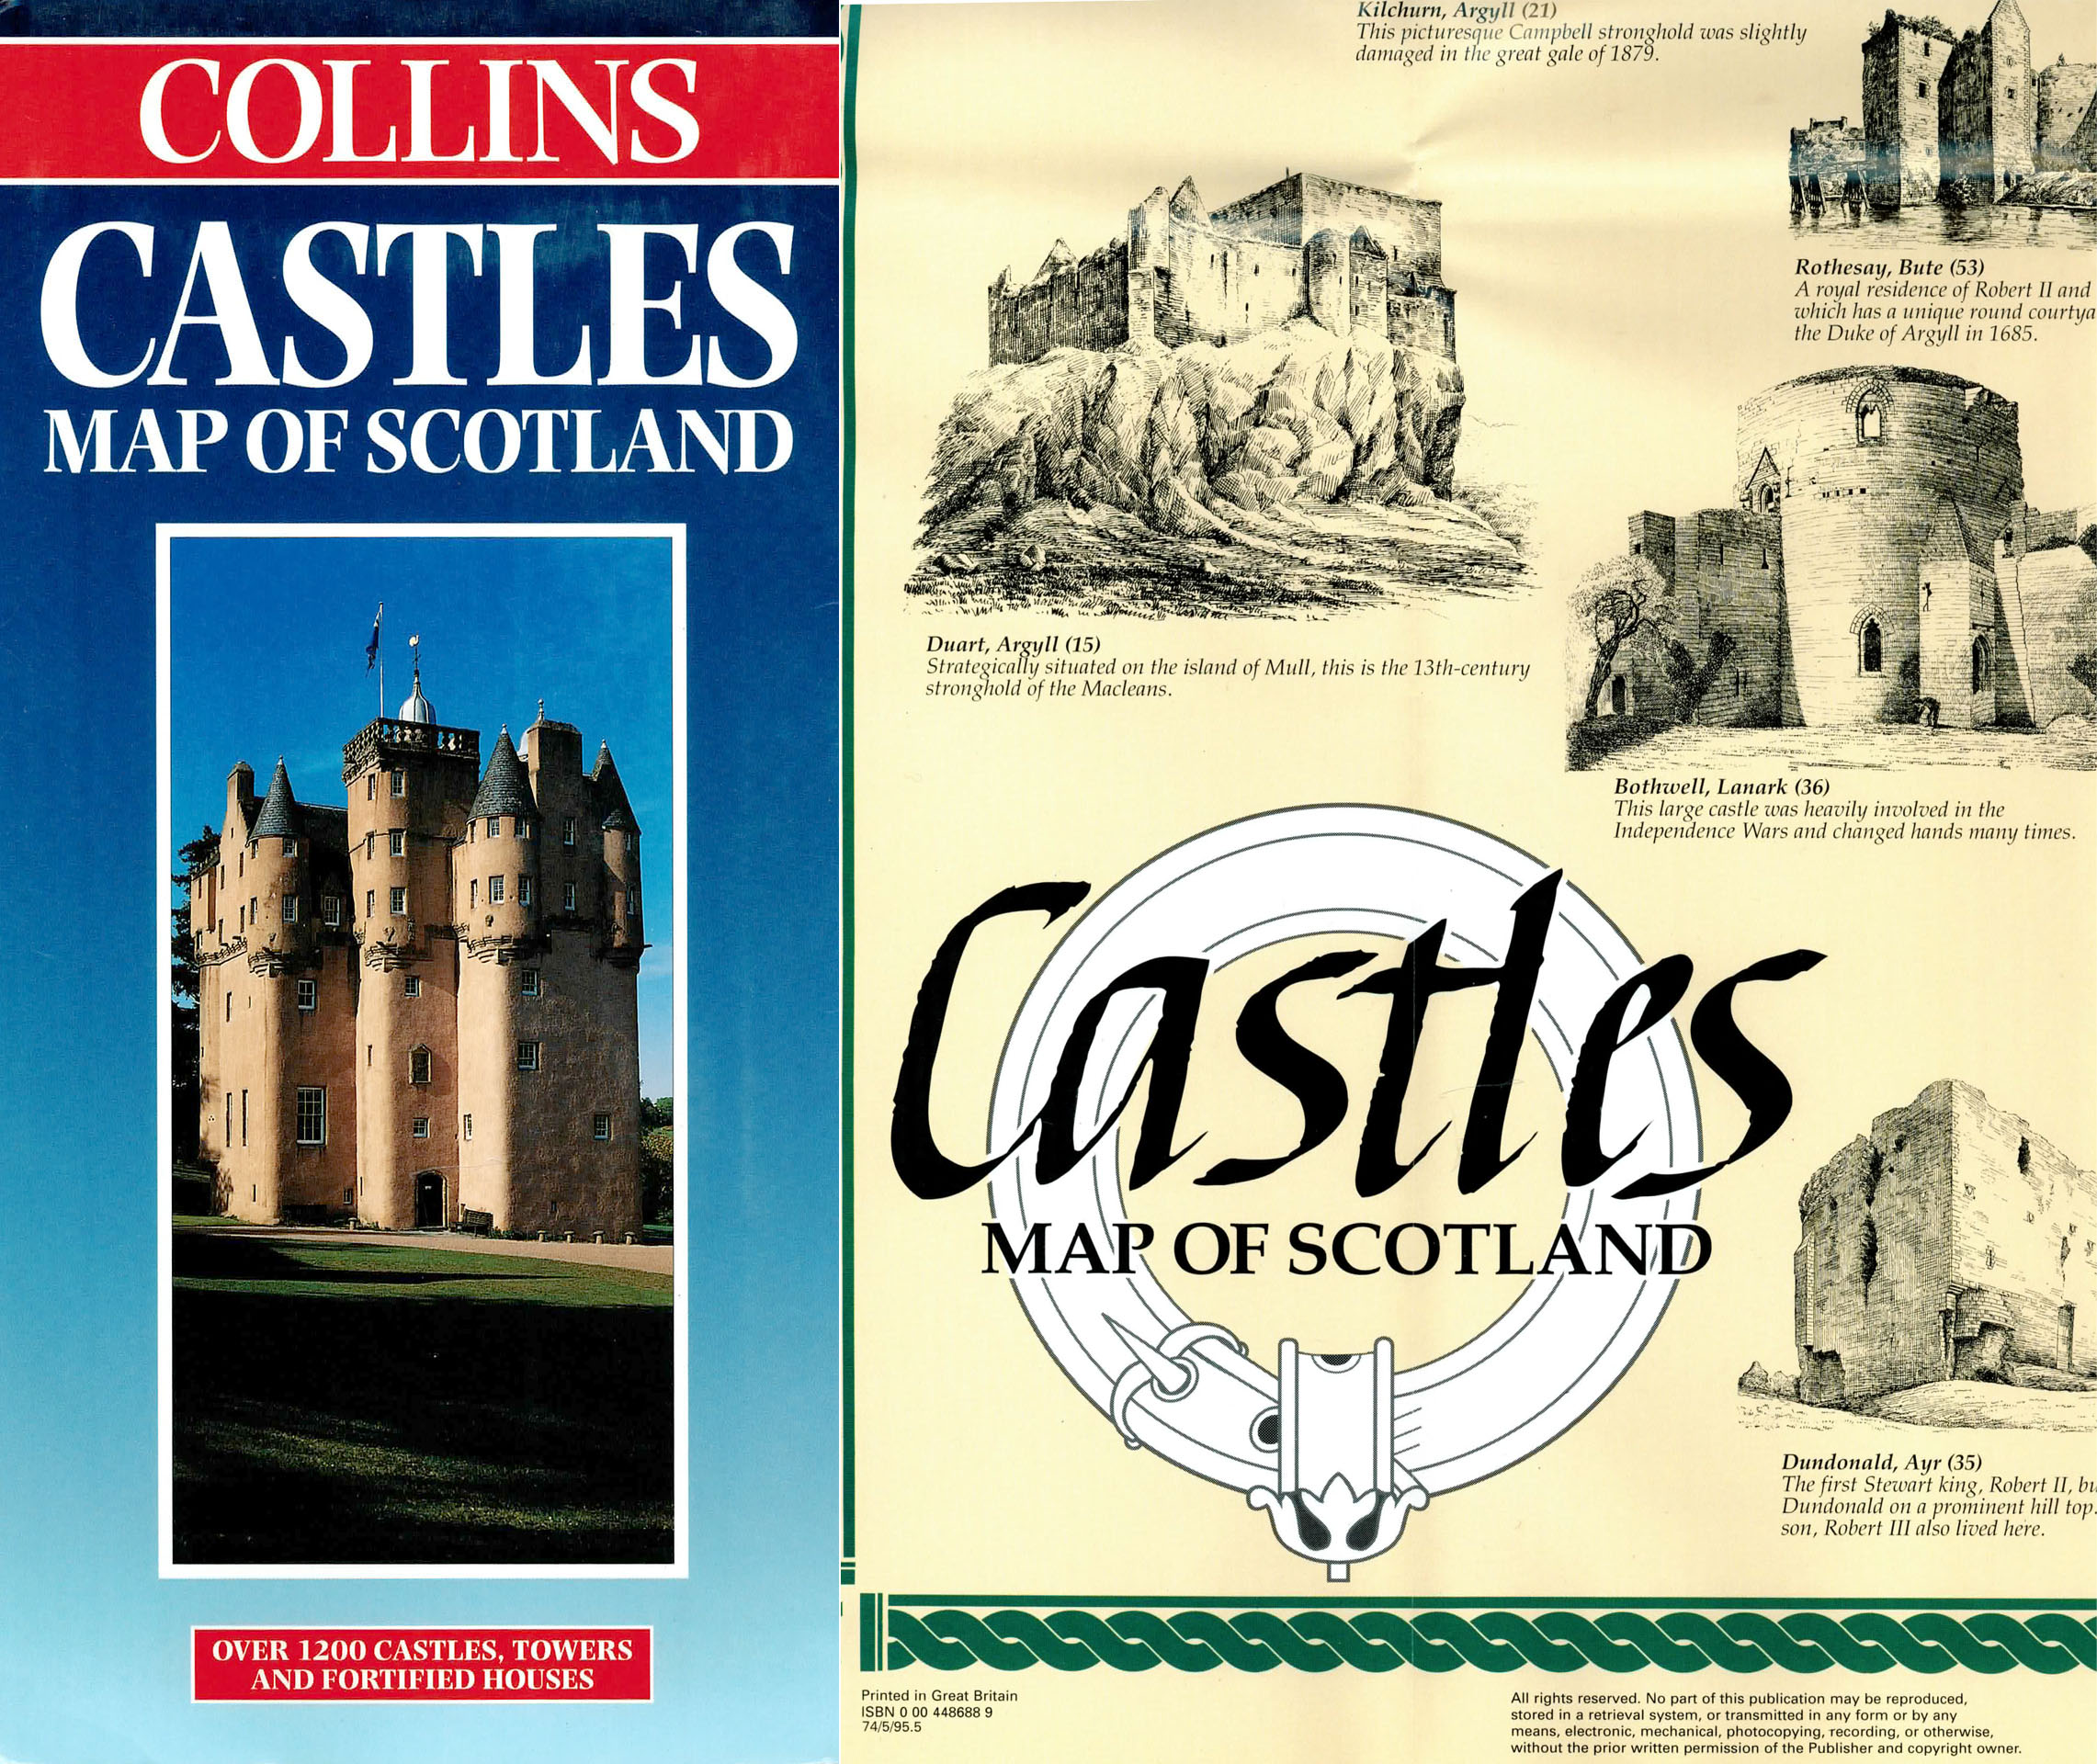 Castles Map of Scotland - Macgregor, Ronald